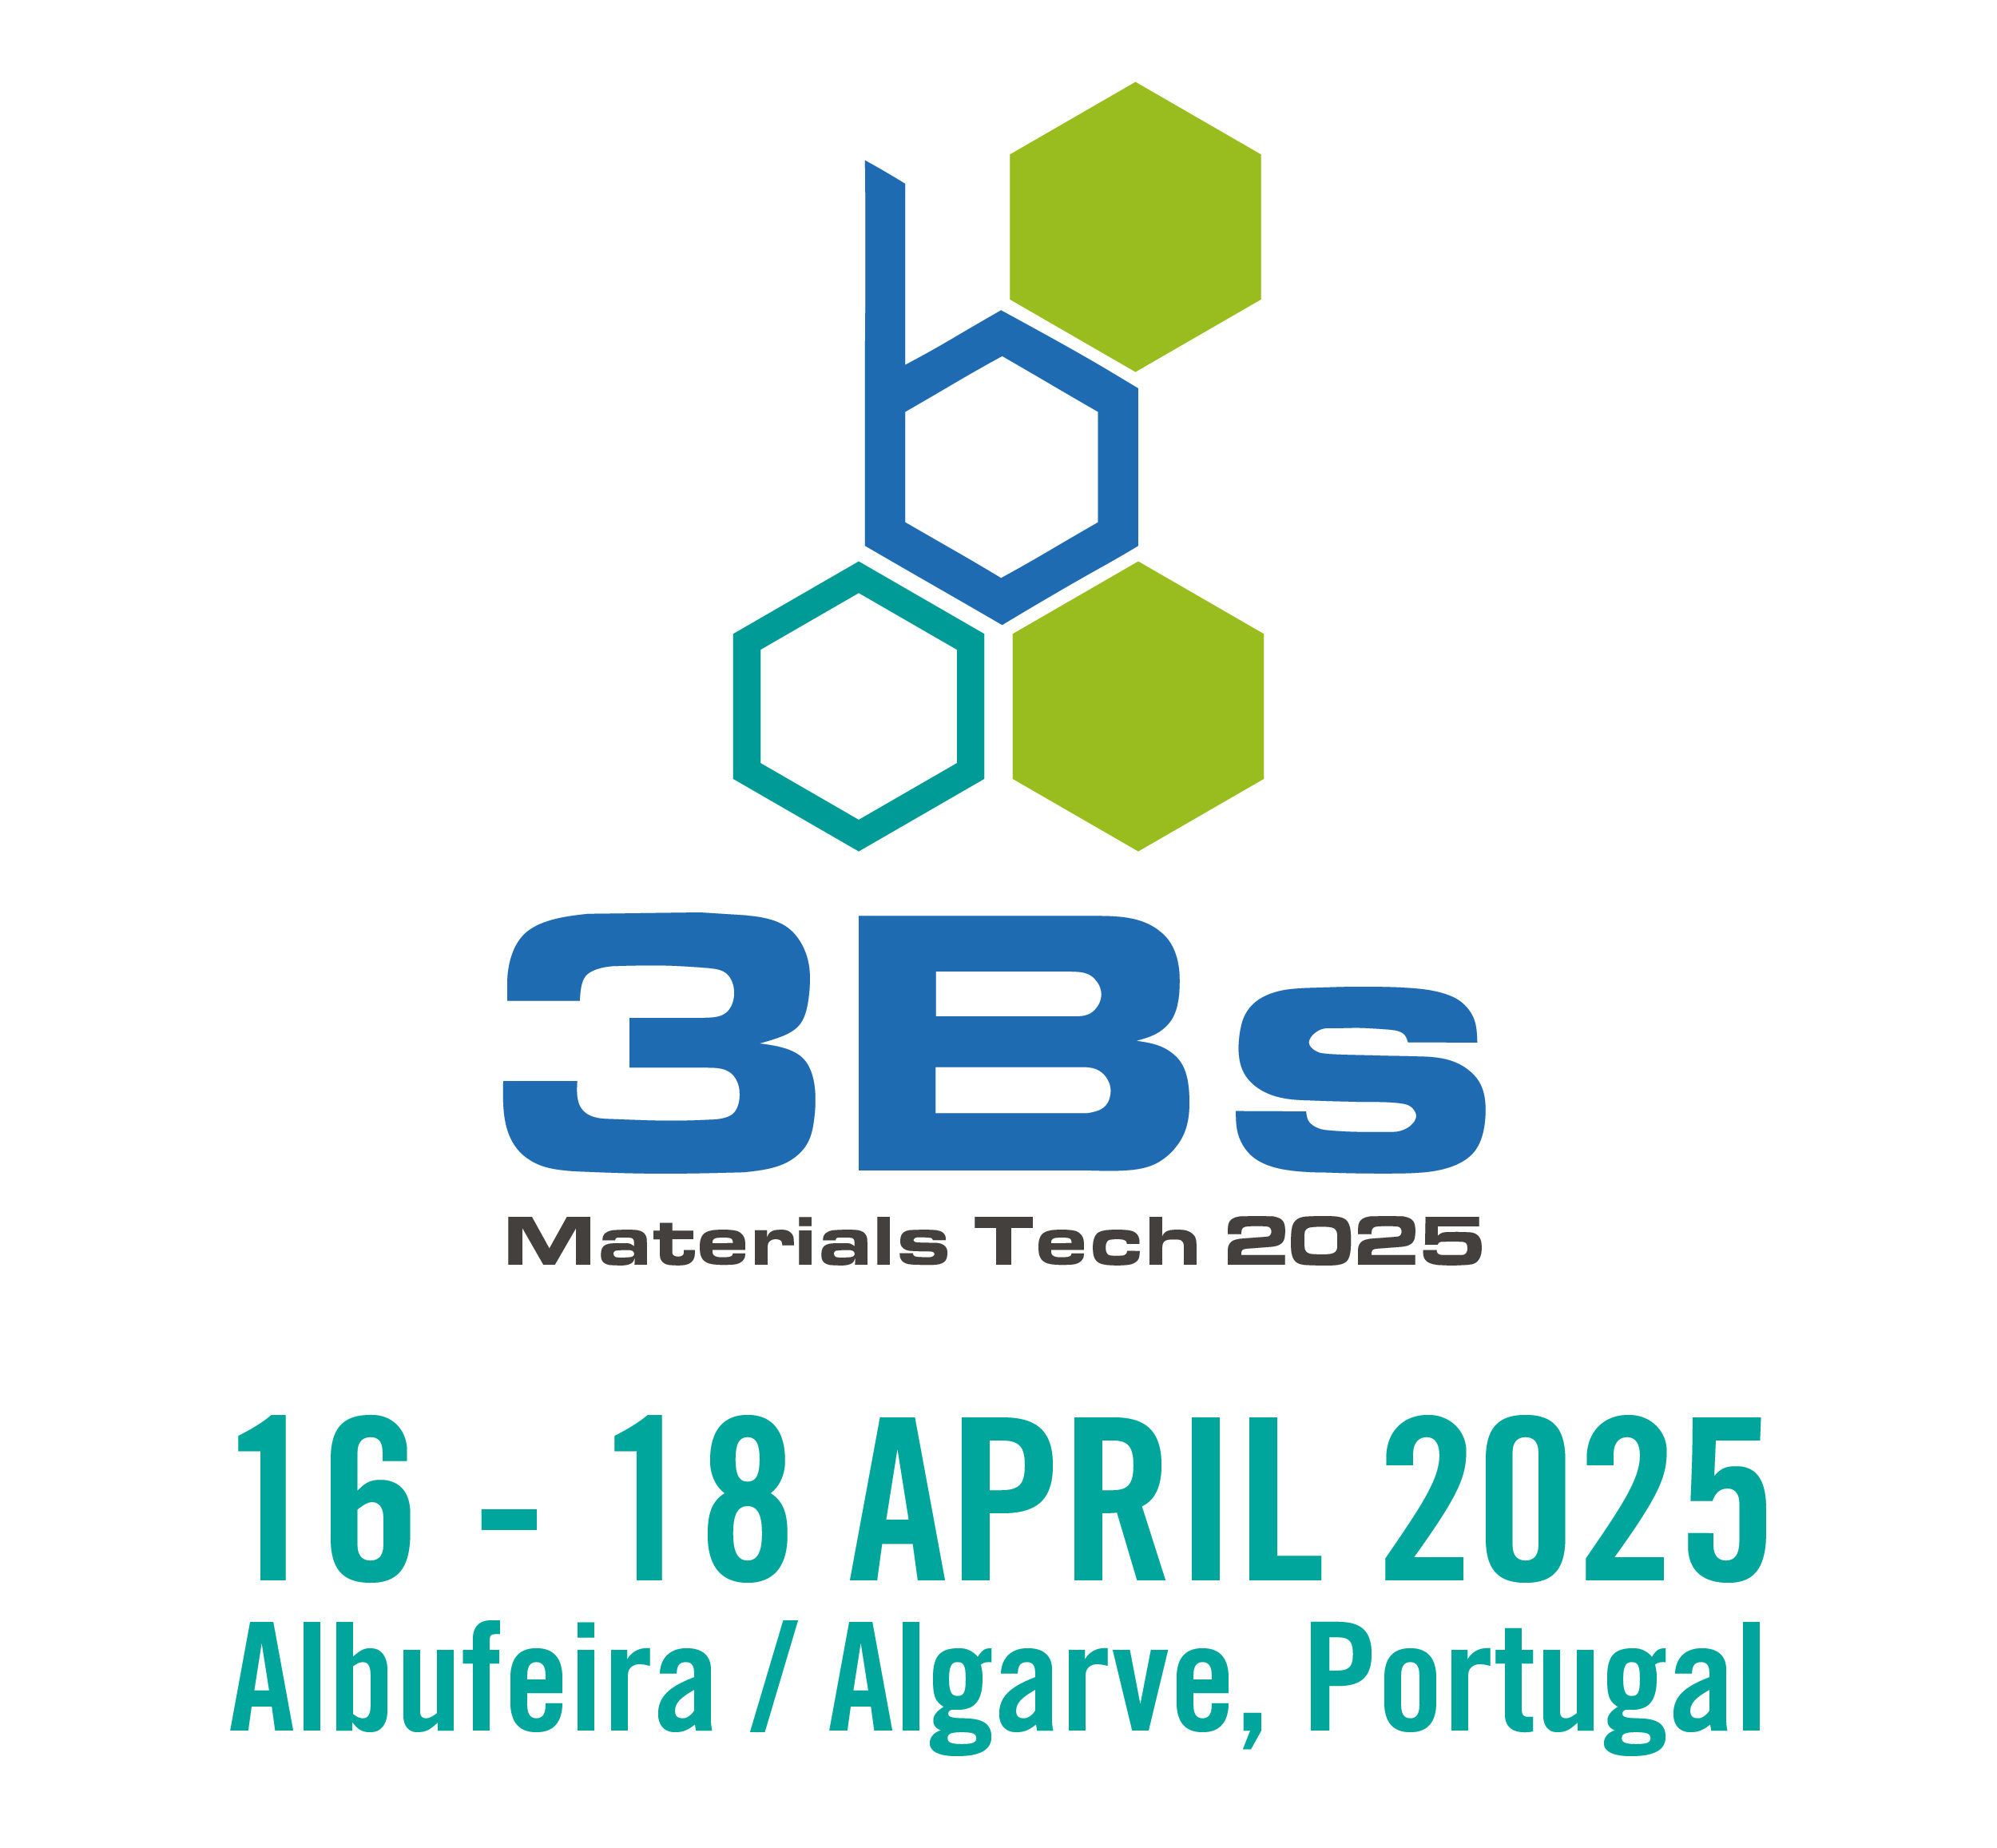 Biomaterials, Biodegradables and Biomimetics International Conference - 3Bs Materials 2025